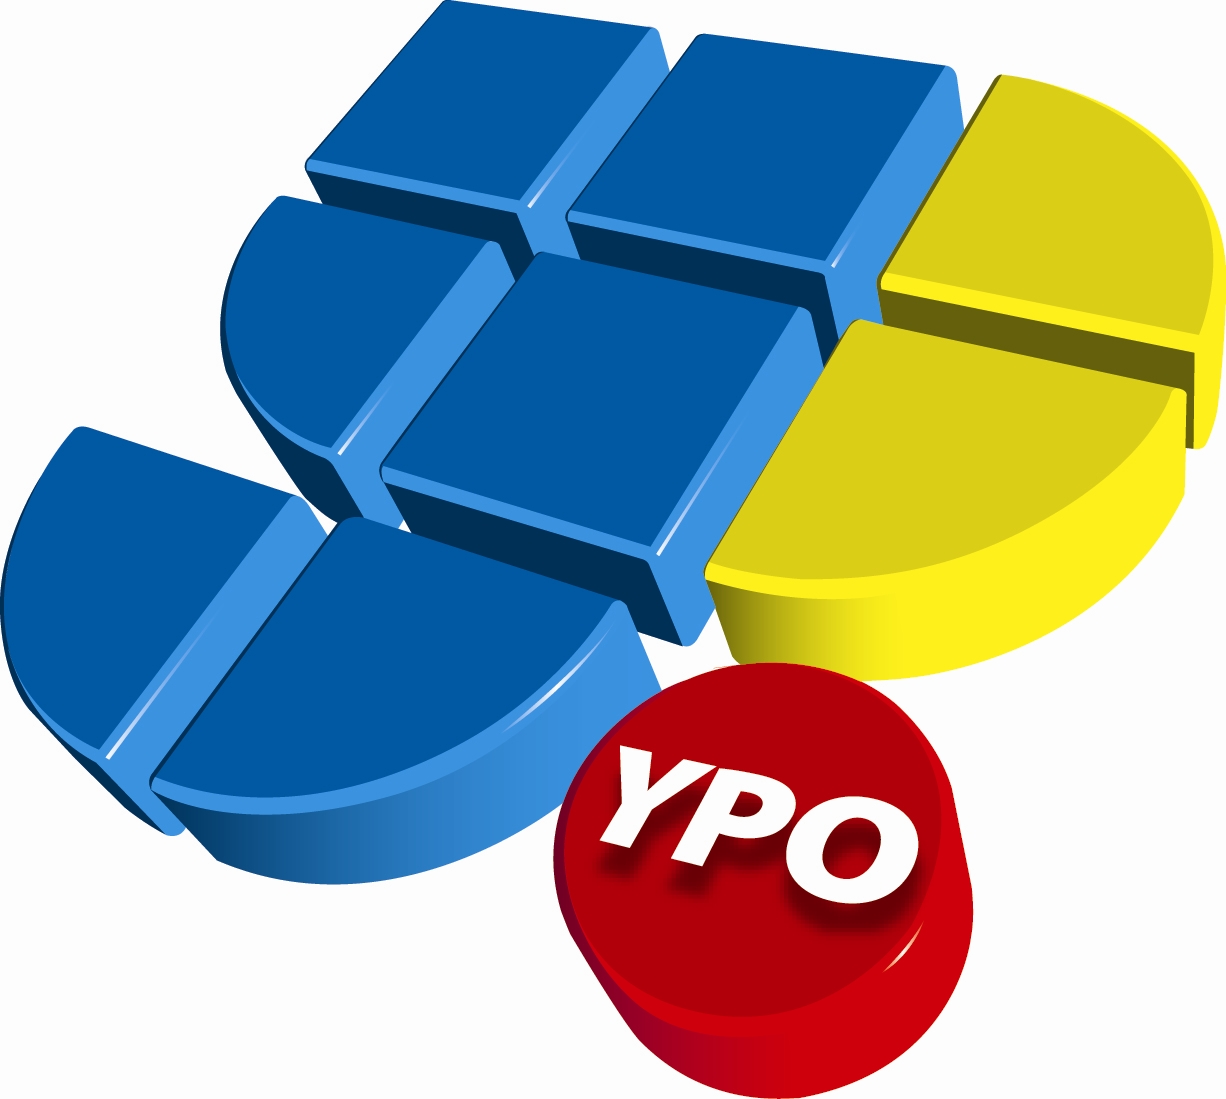 YPO (Yorkshire Purchasing Organisation)